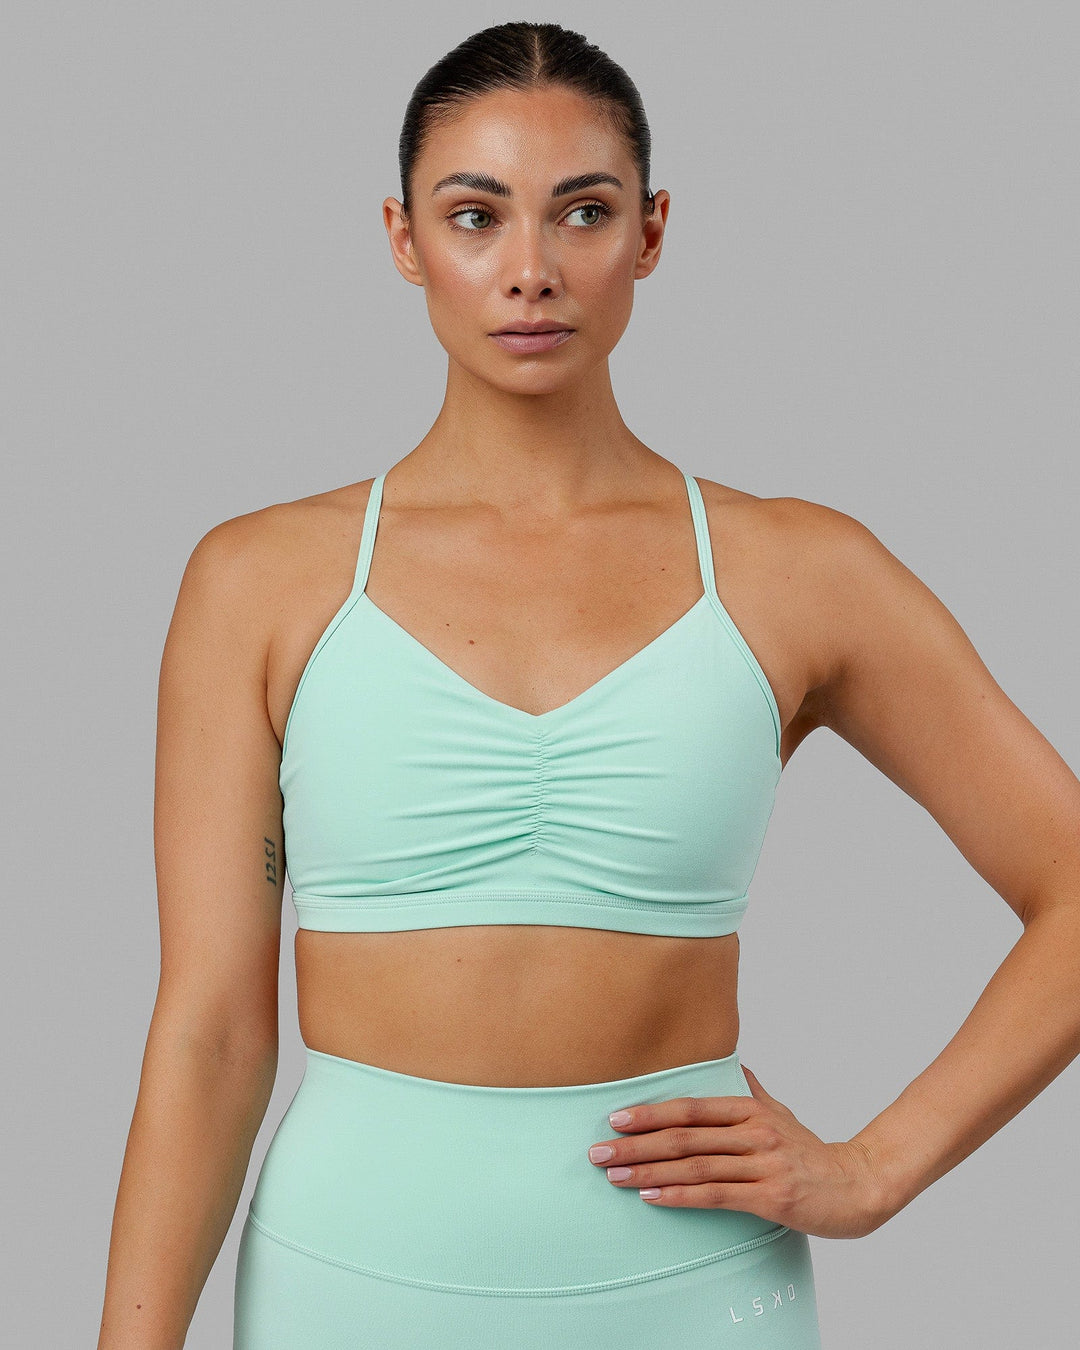 Woman wearing Fundamental Sports Bra - Pastel Turquoise